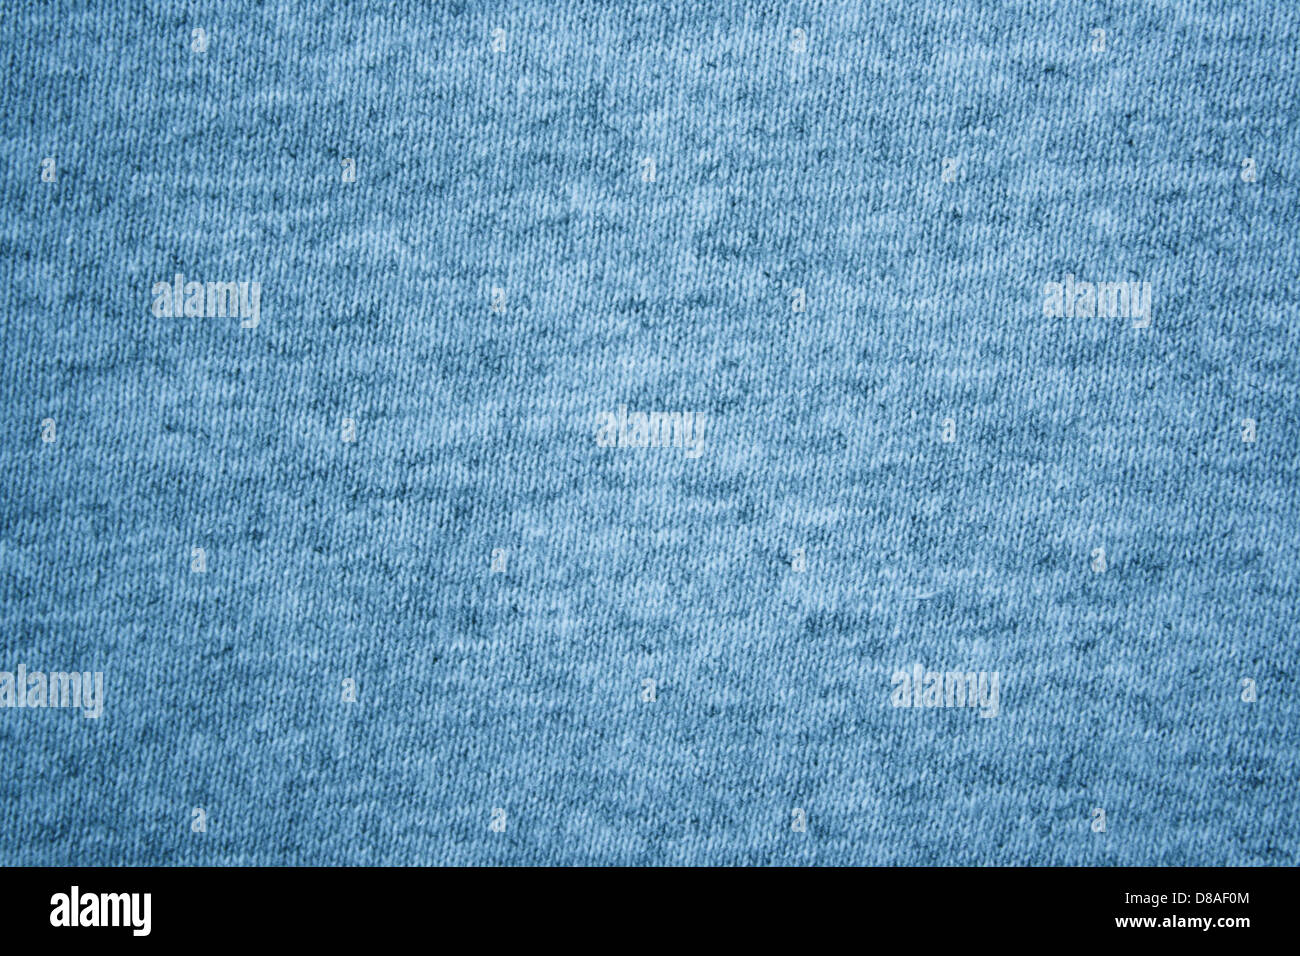 Light Blue Heather Knit T-Shirt Fabric Texture Picture Free Photograph  Photos Public Domain